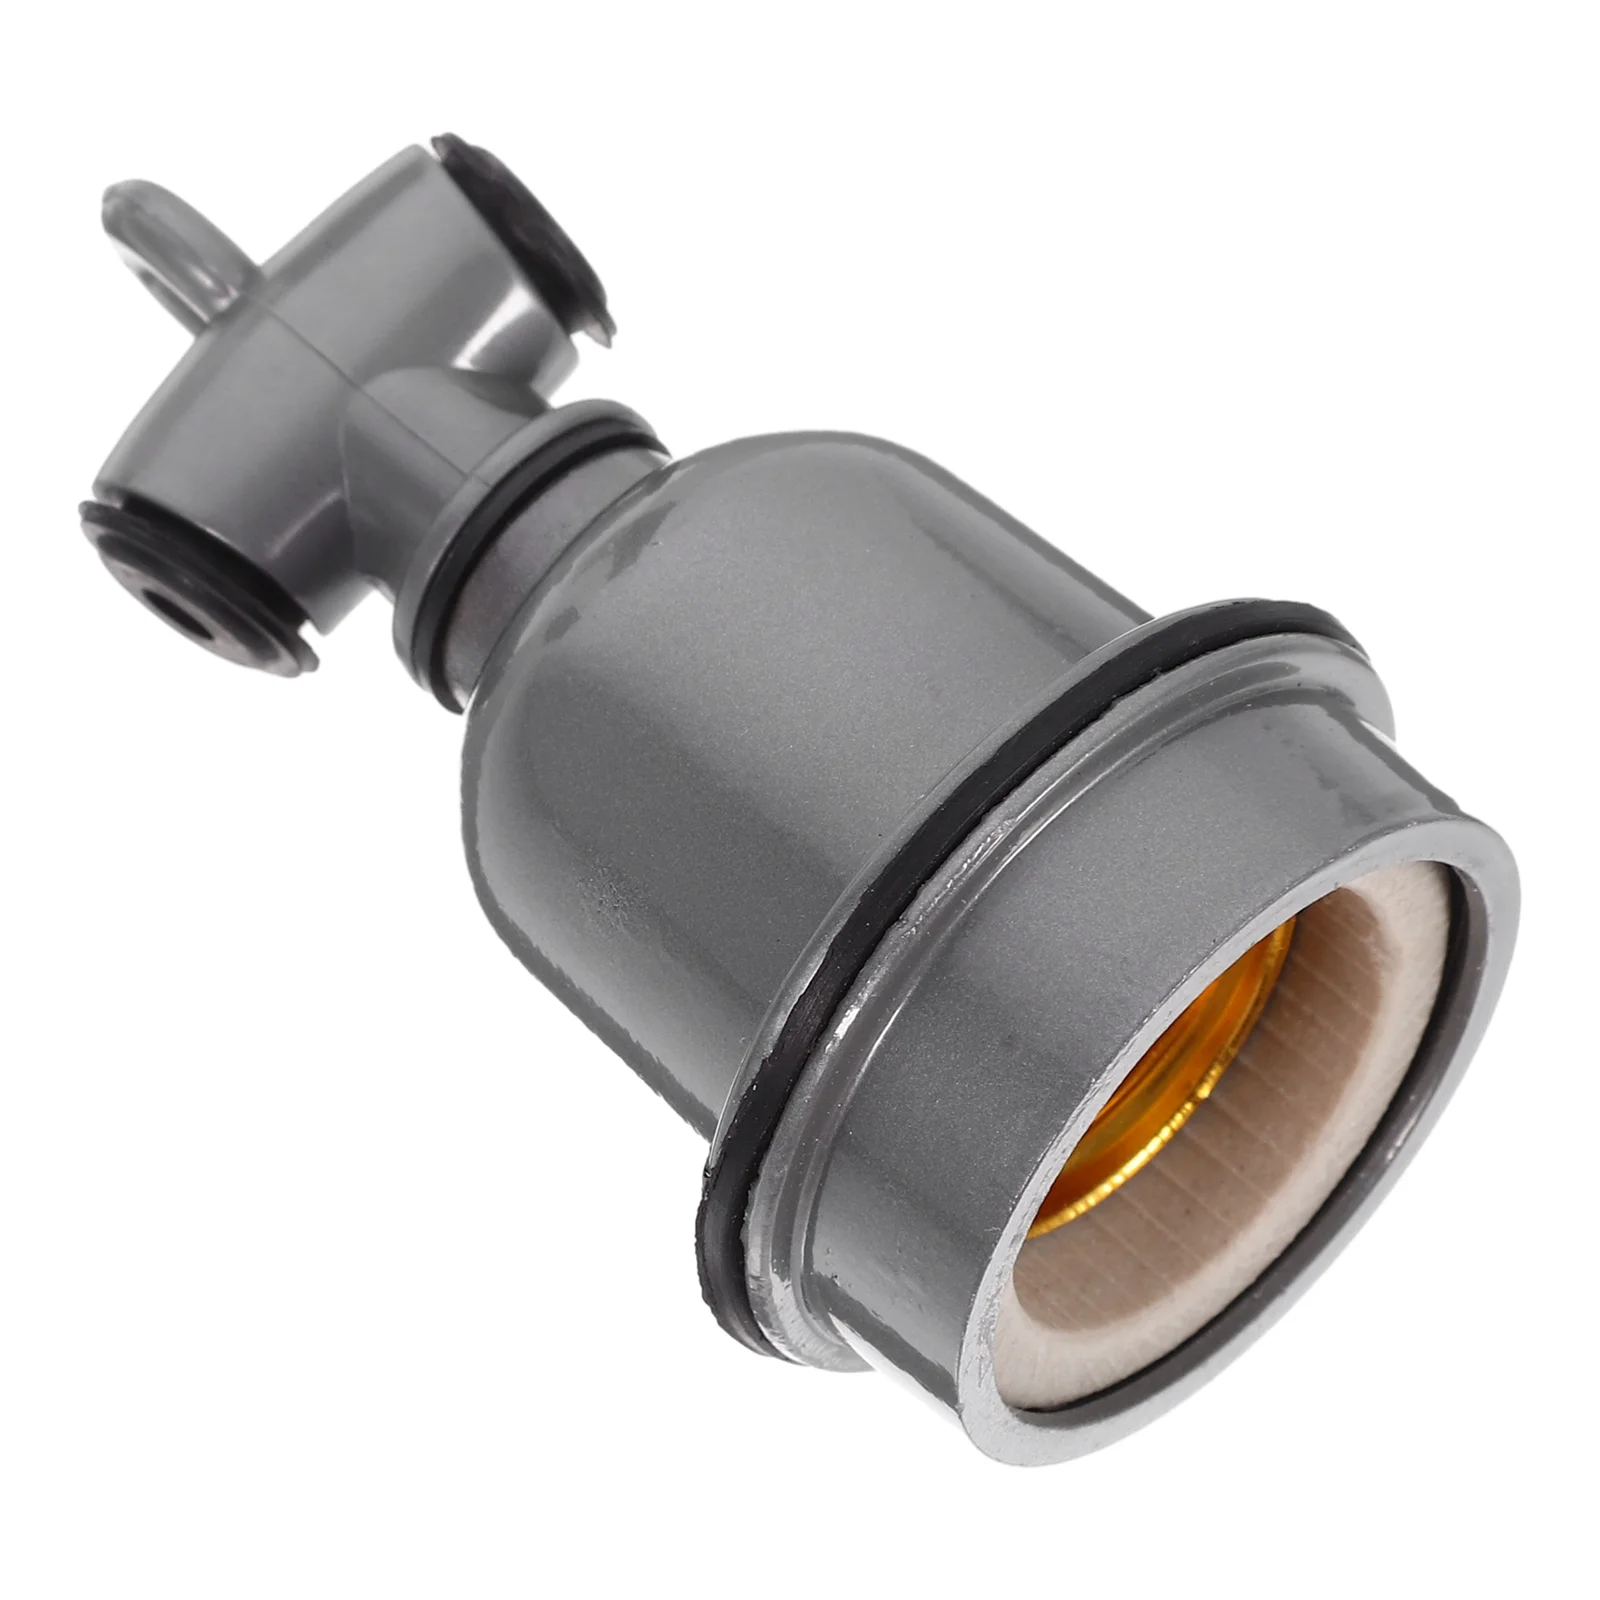 

2 Pcs Heat Preservation Lamp Holder Light Bulb Socket Sockets Metal E27 Parts for Making Lamps